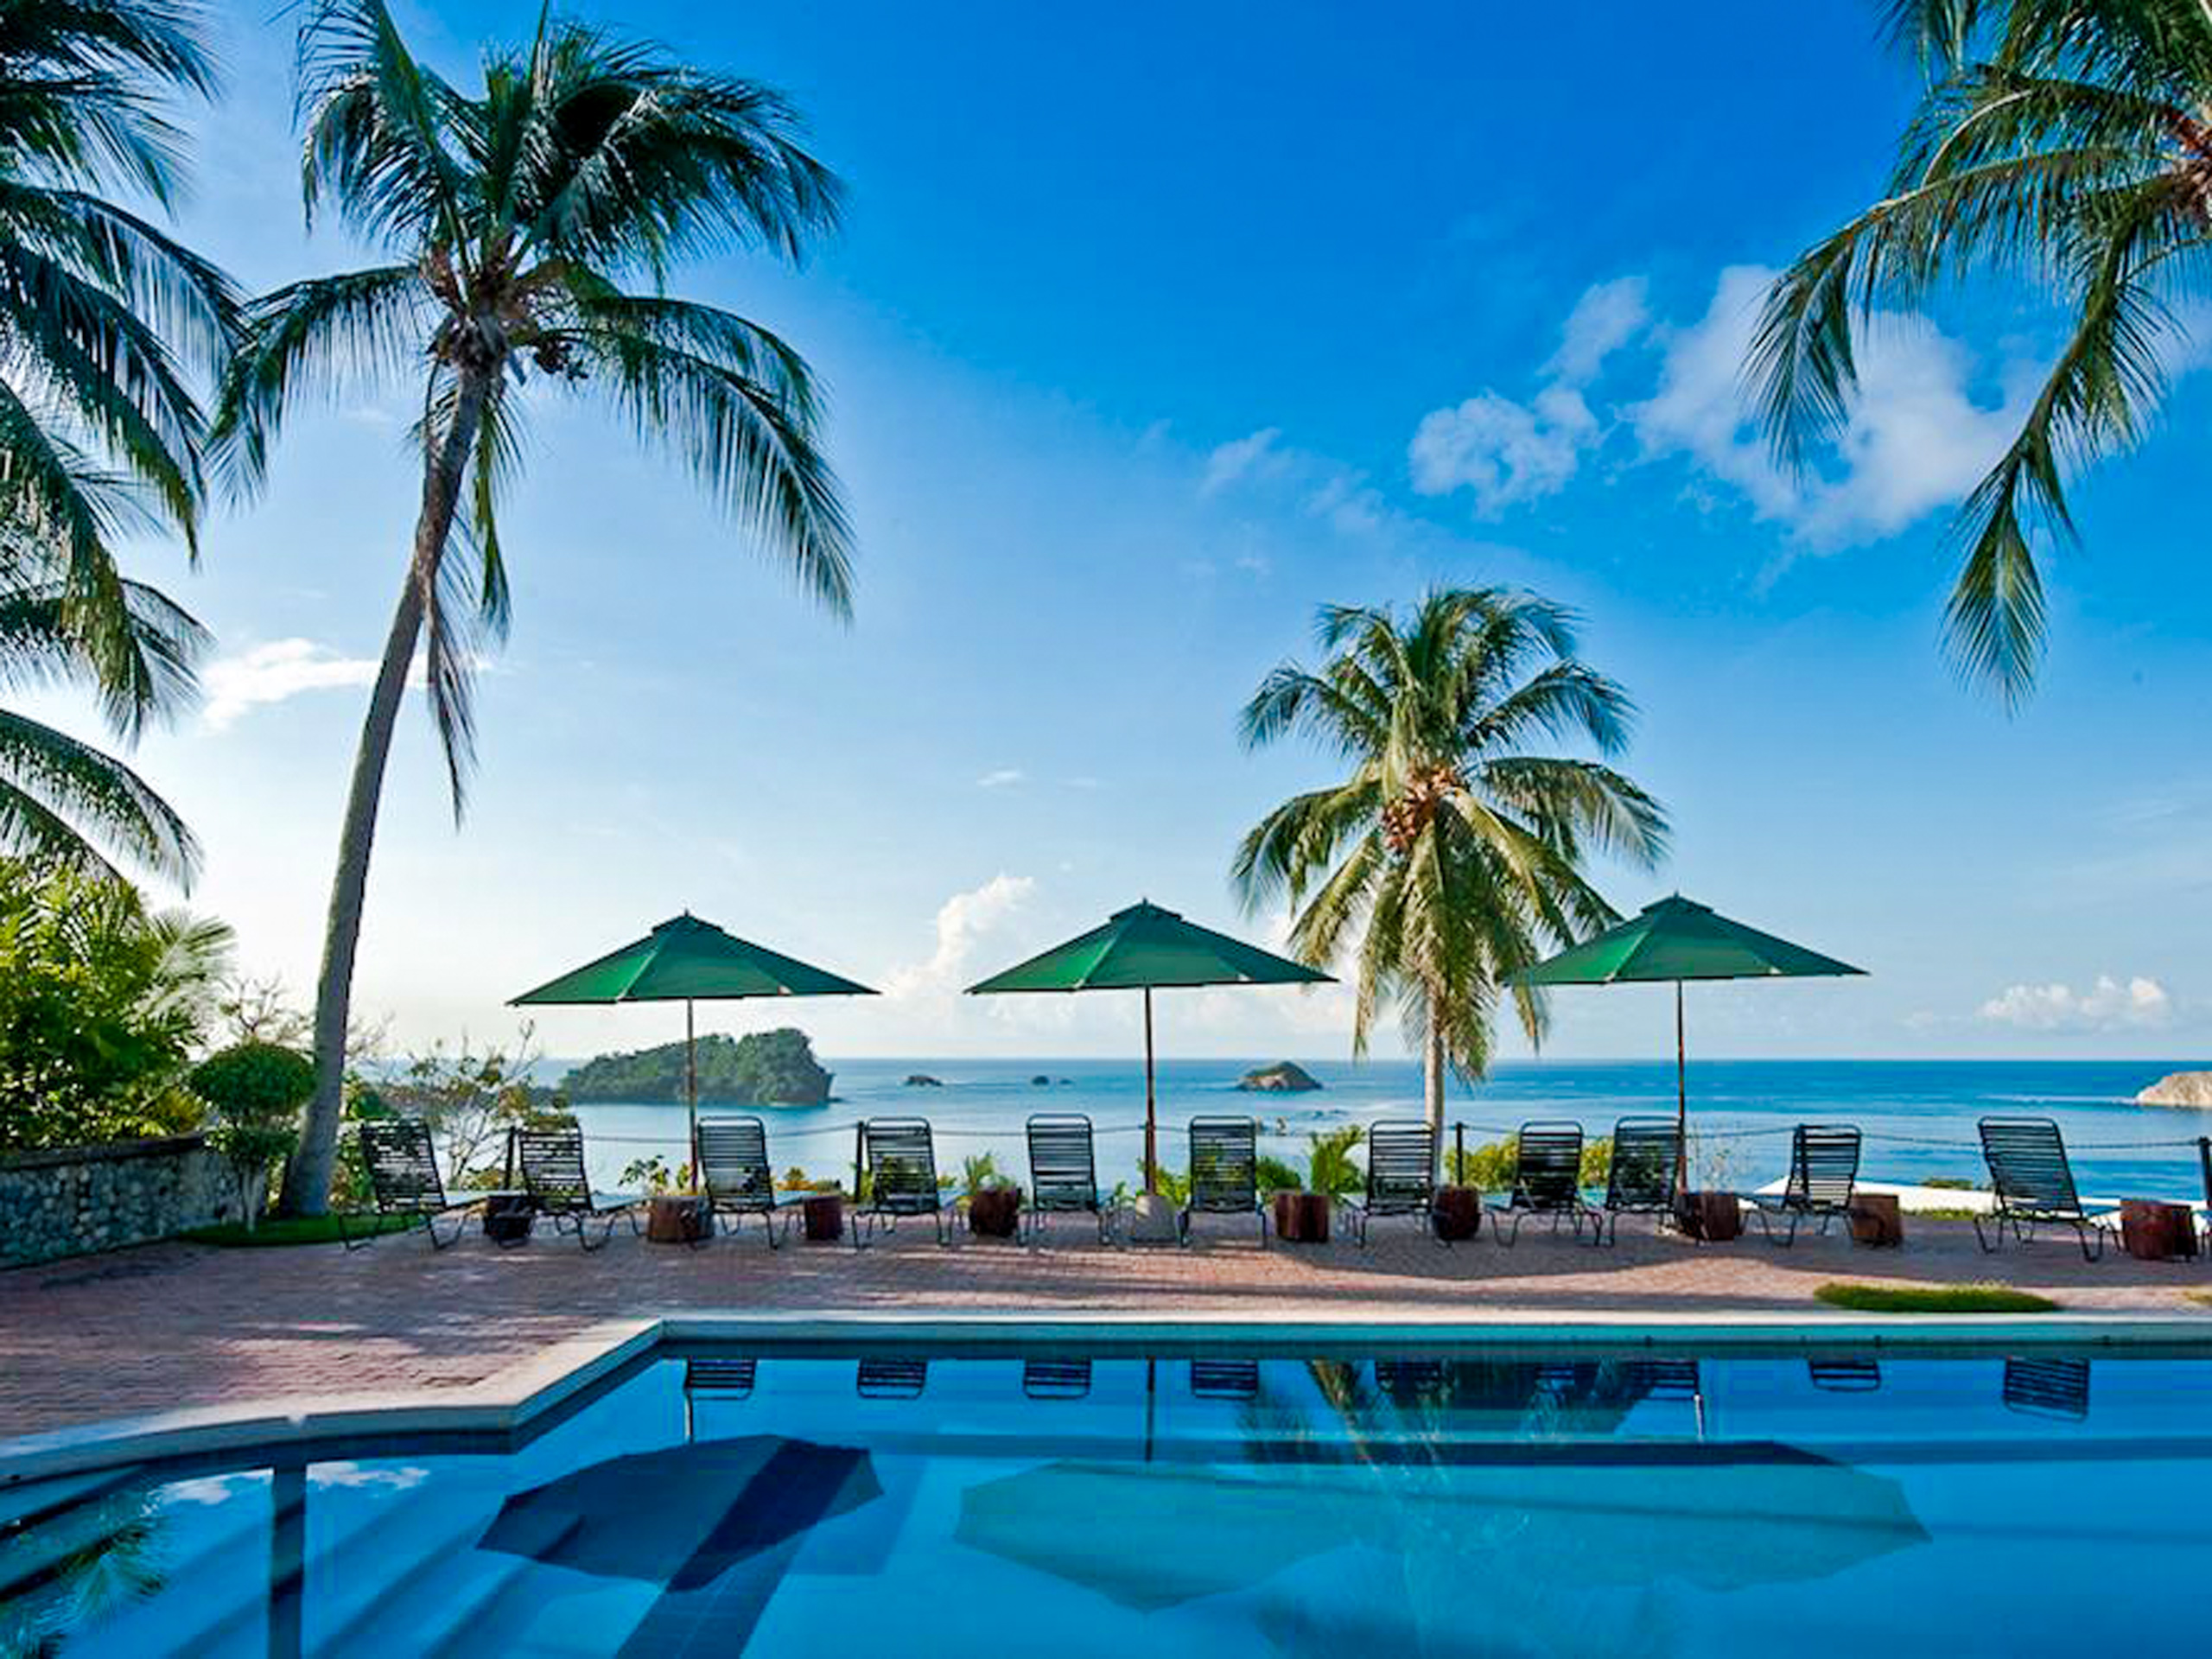 Beautiful Costa Verde Hotel landscape